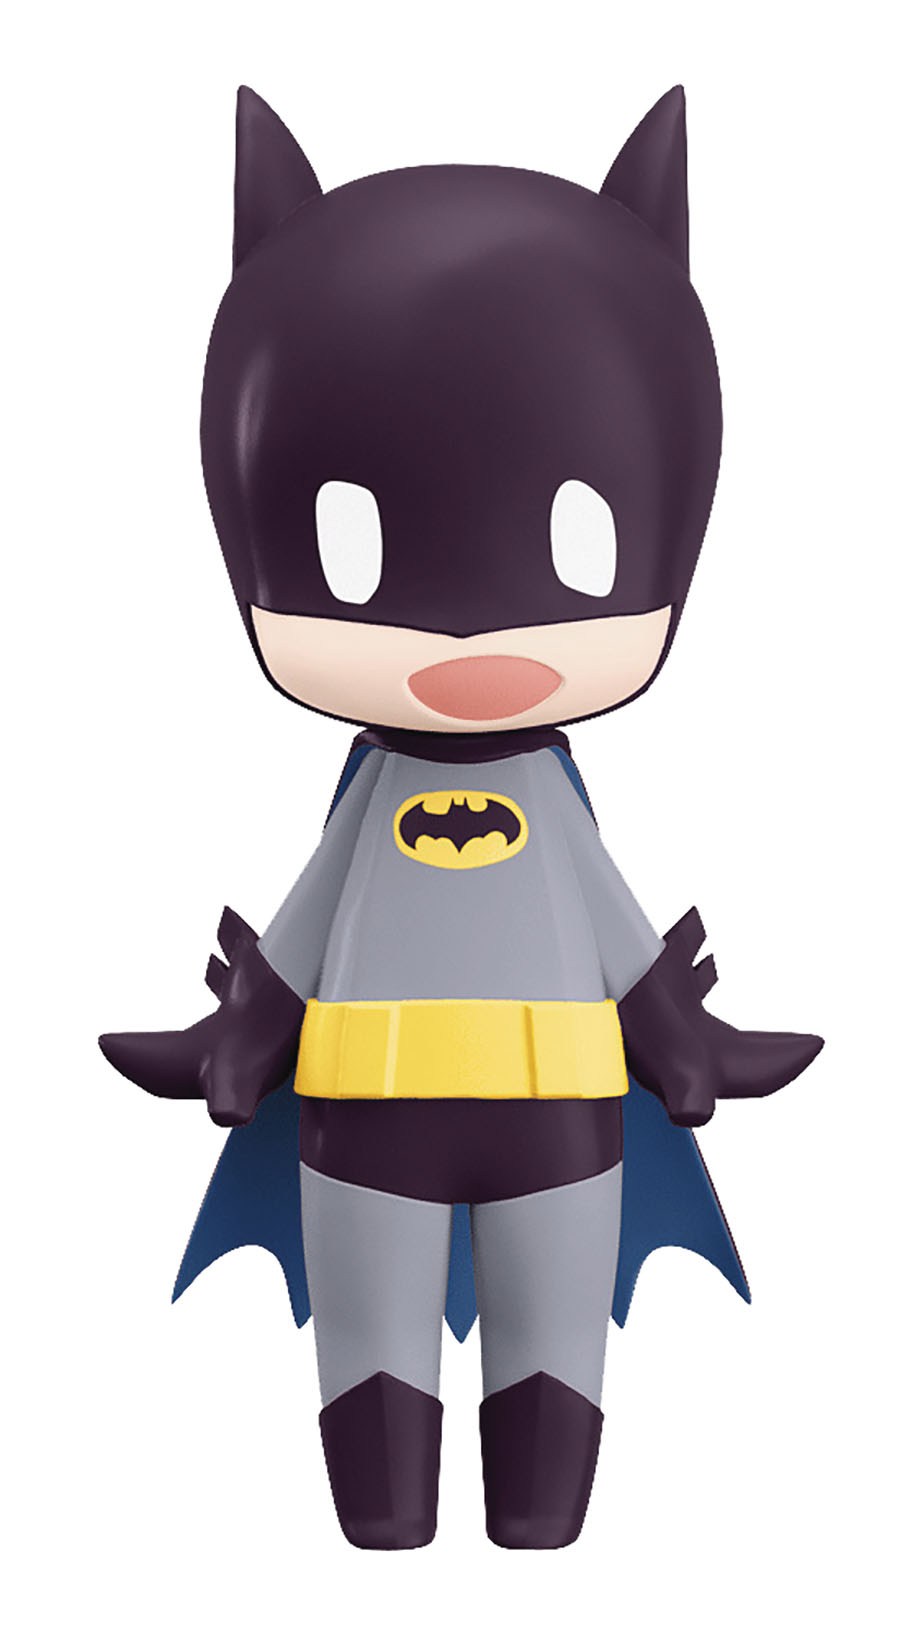 DC Heroes Hello Good Smile Mini Figure - Batman